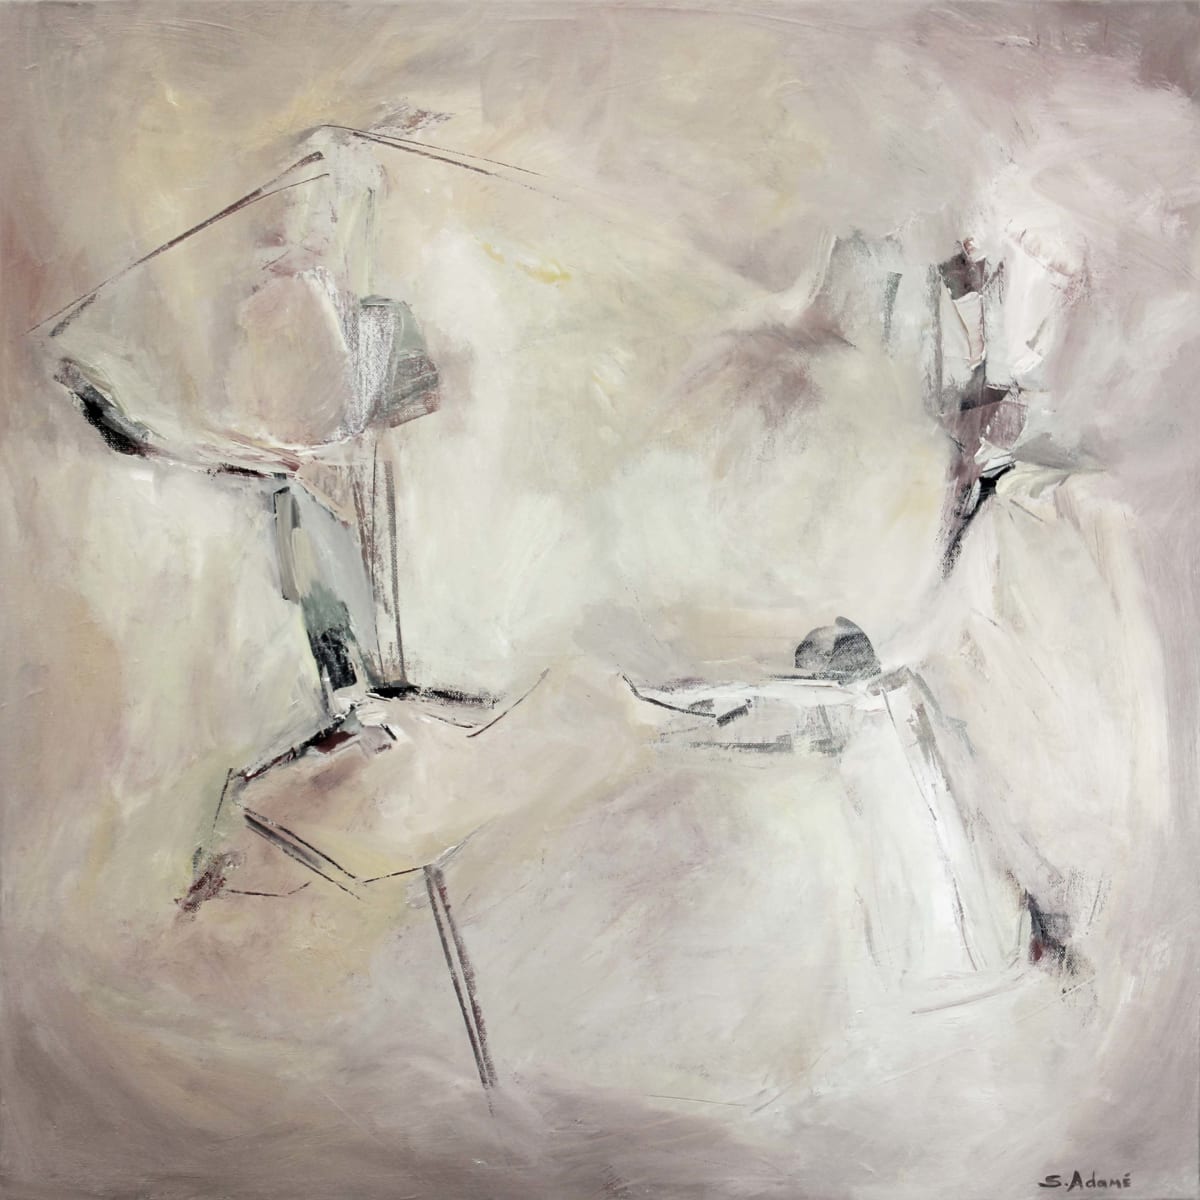 Life Dance by Susan Adame 